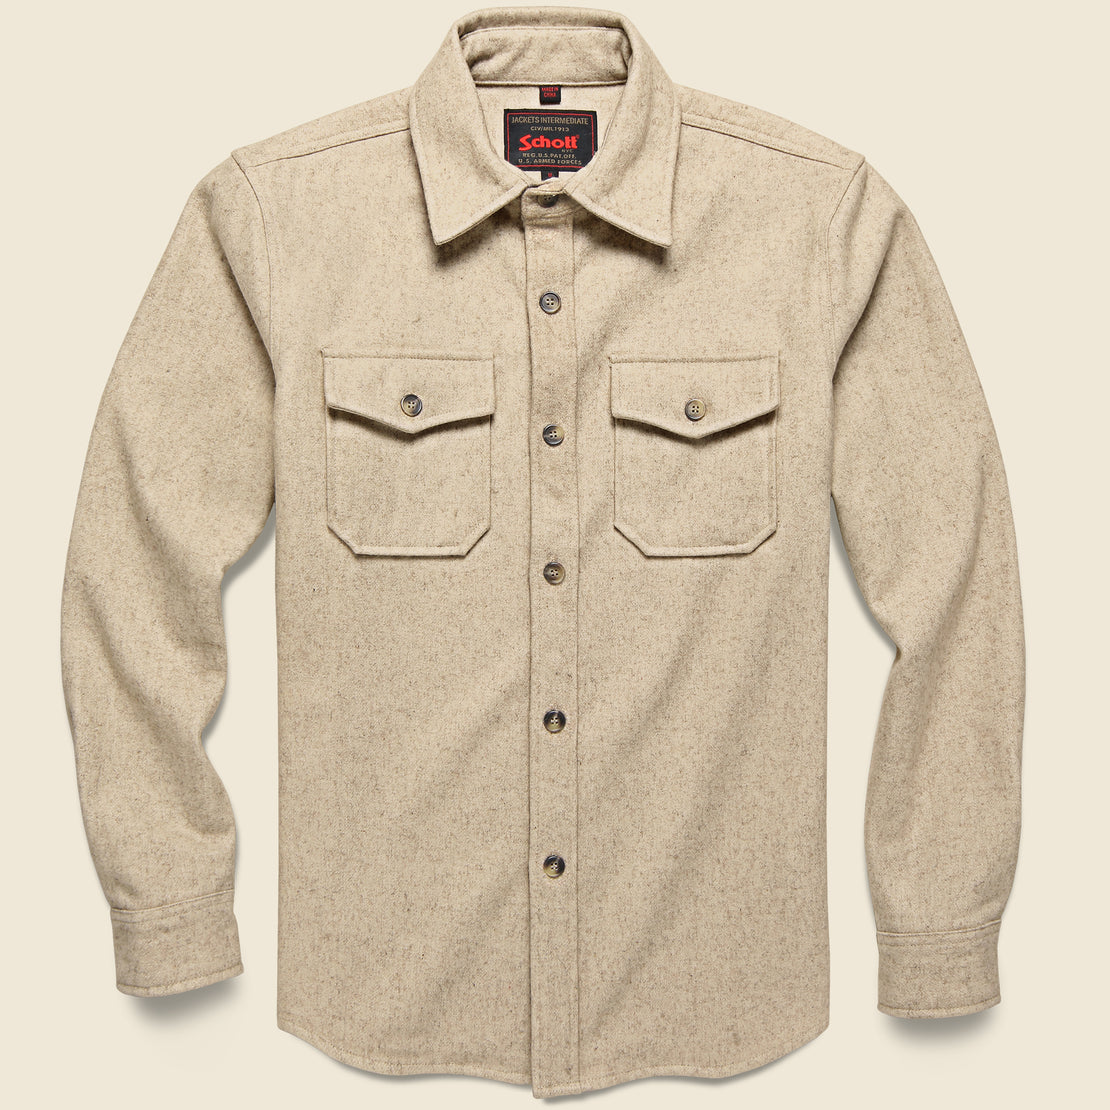 CPO Wool Shirt - Taupe